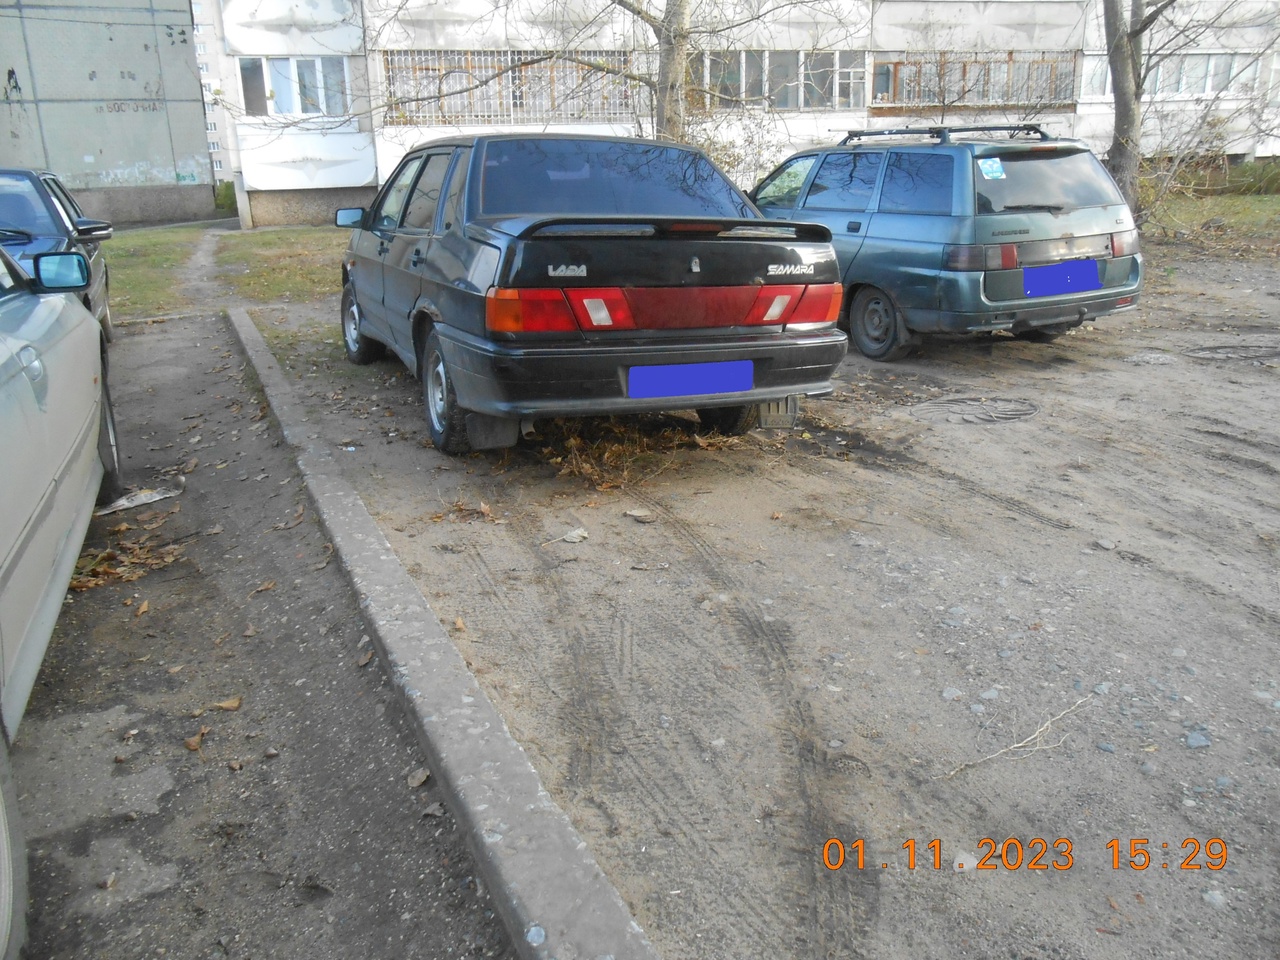 Поставил машину на газон или детскую площадку - уплати 500 - 1000 рублей!.